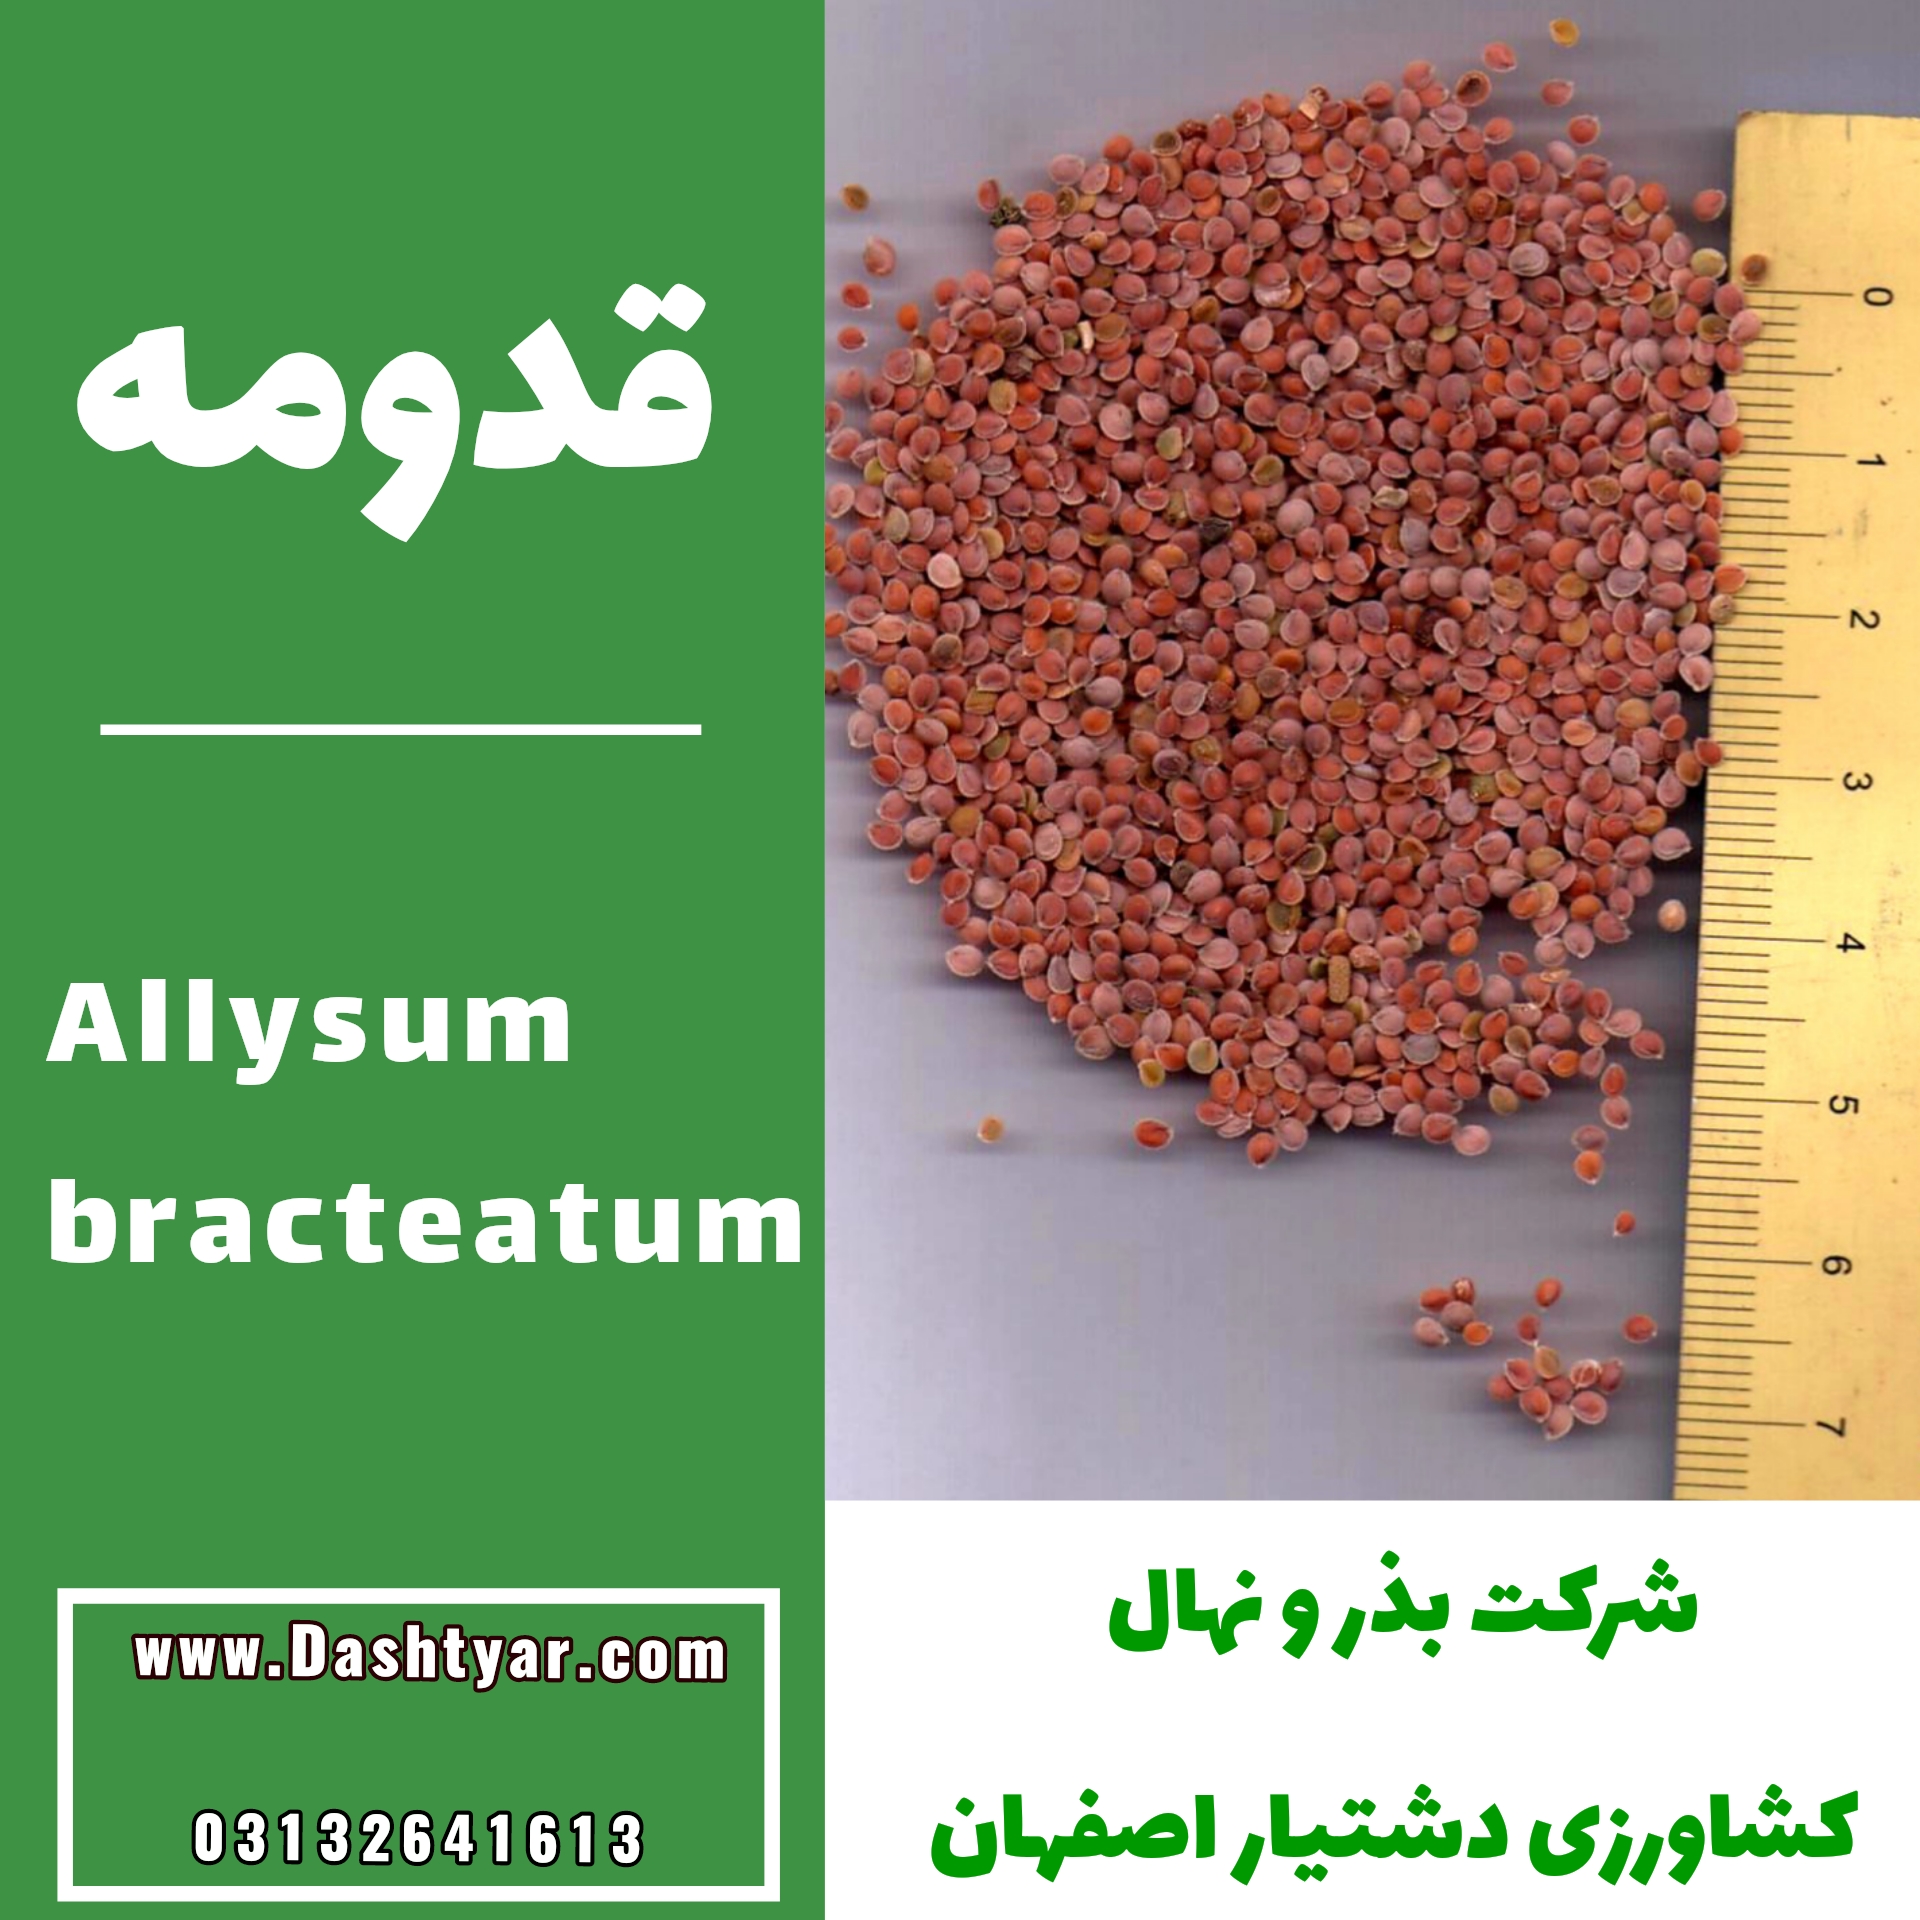 بذر قدومه(Allysum bracteatum)